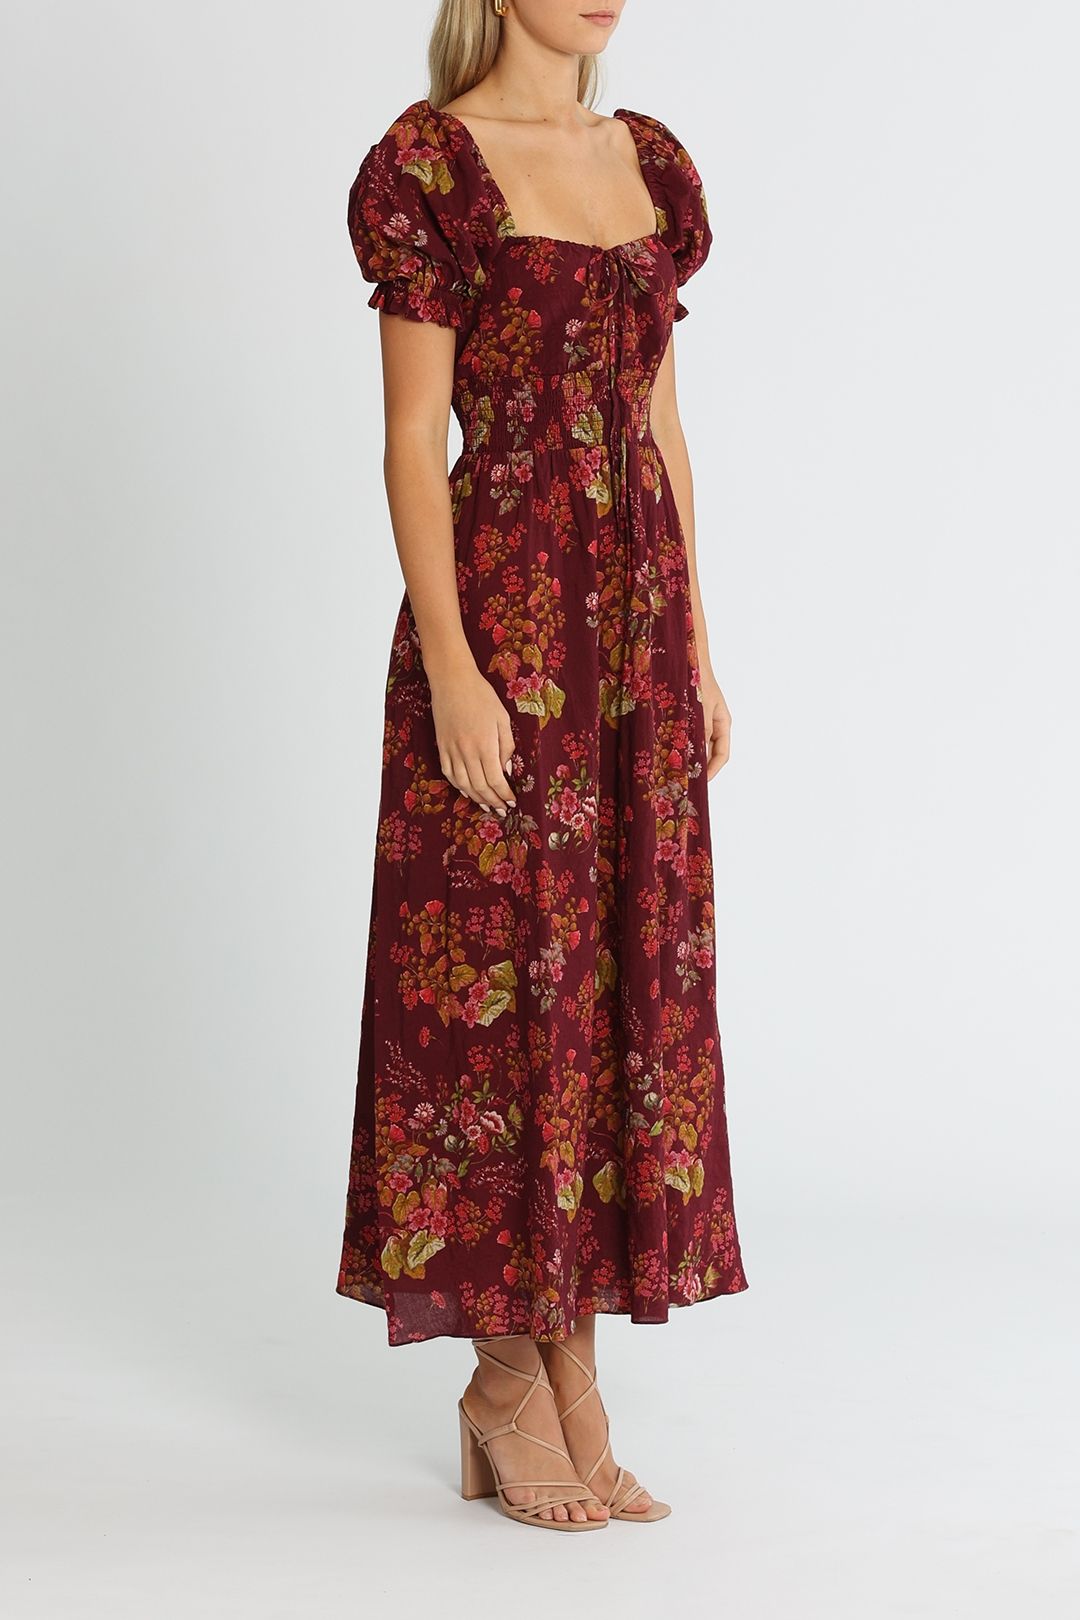 PEONY Tie Front Midi Dress Renaissance Floral